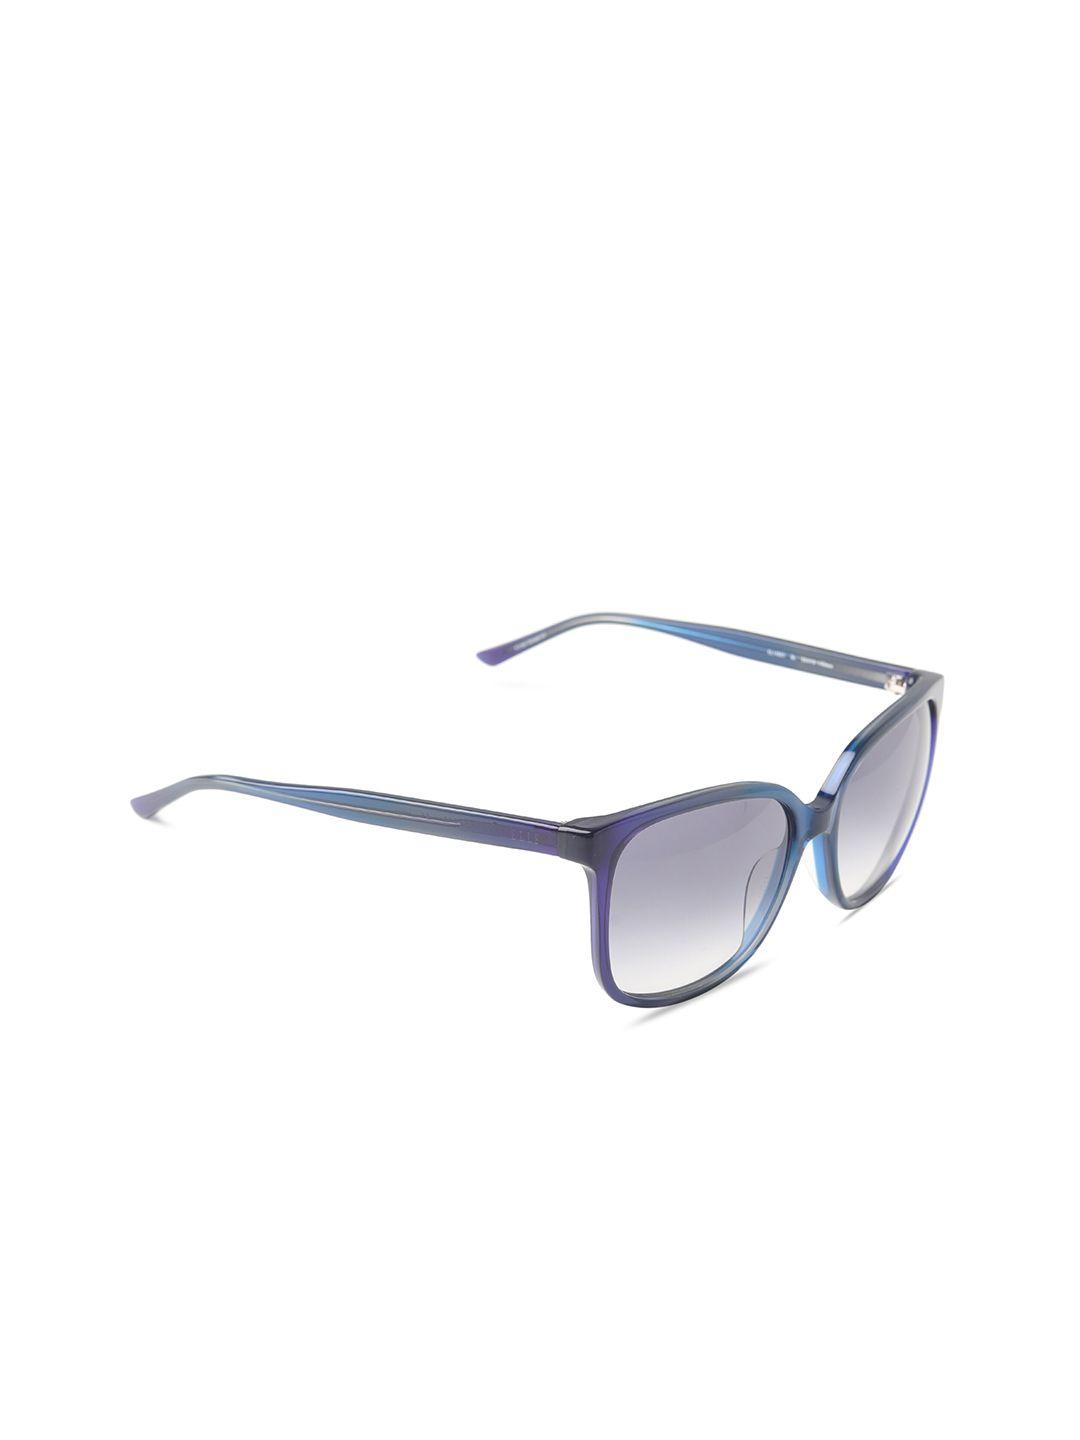 elle women grey lens & blue wayfarer sunglasses with uv protected lens